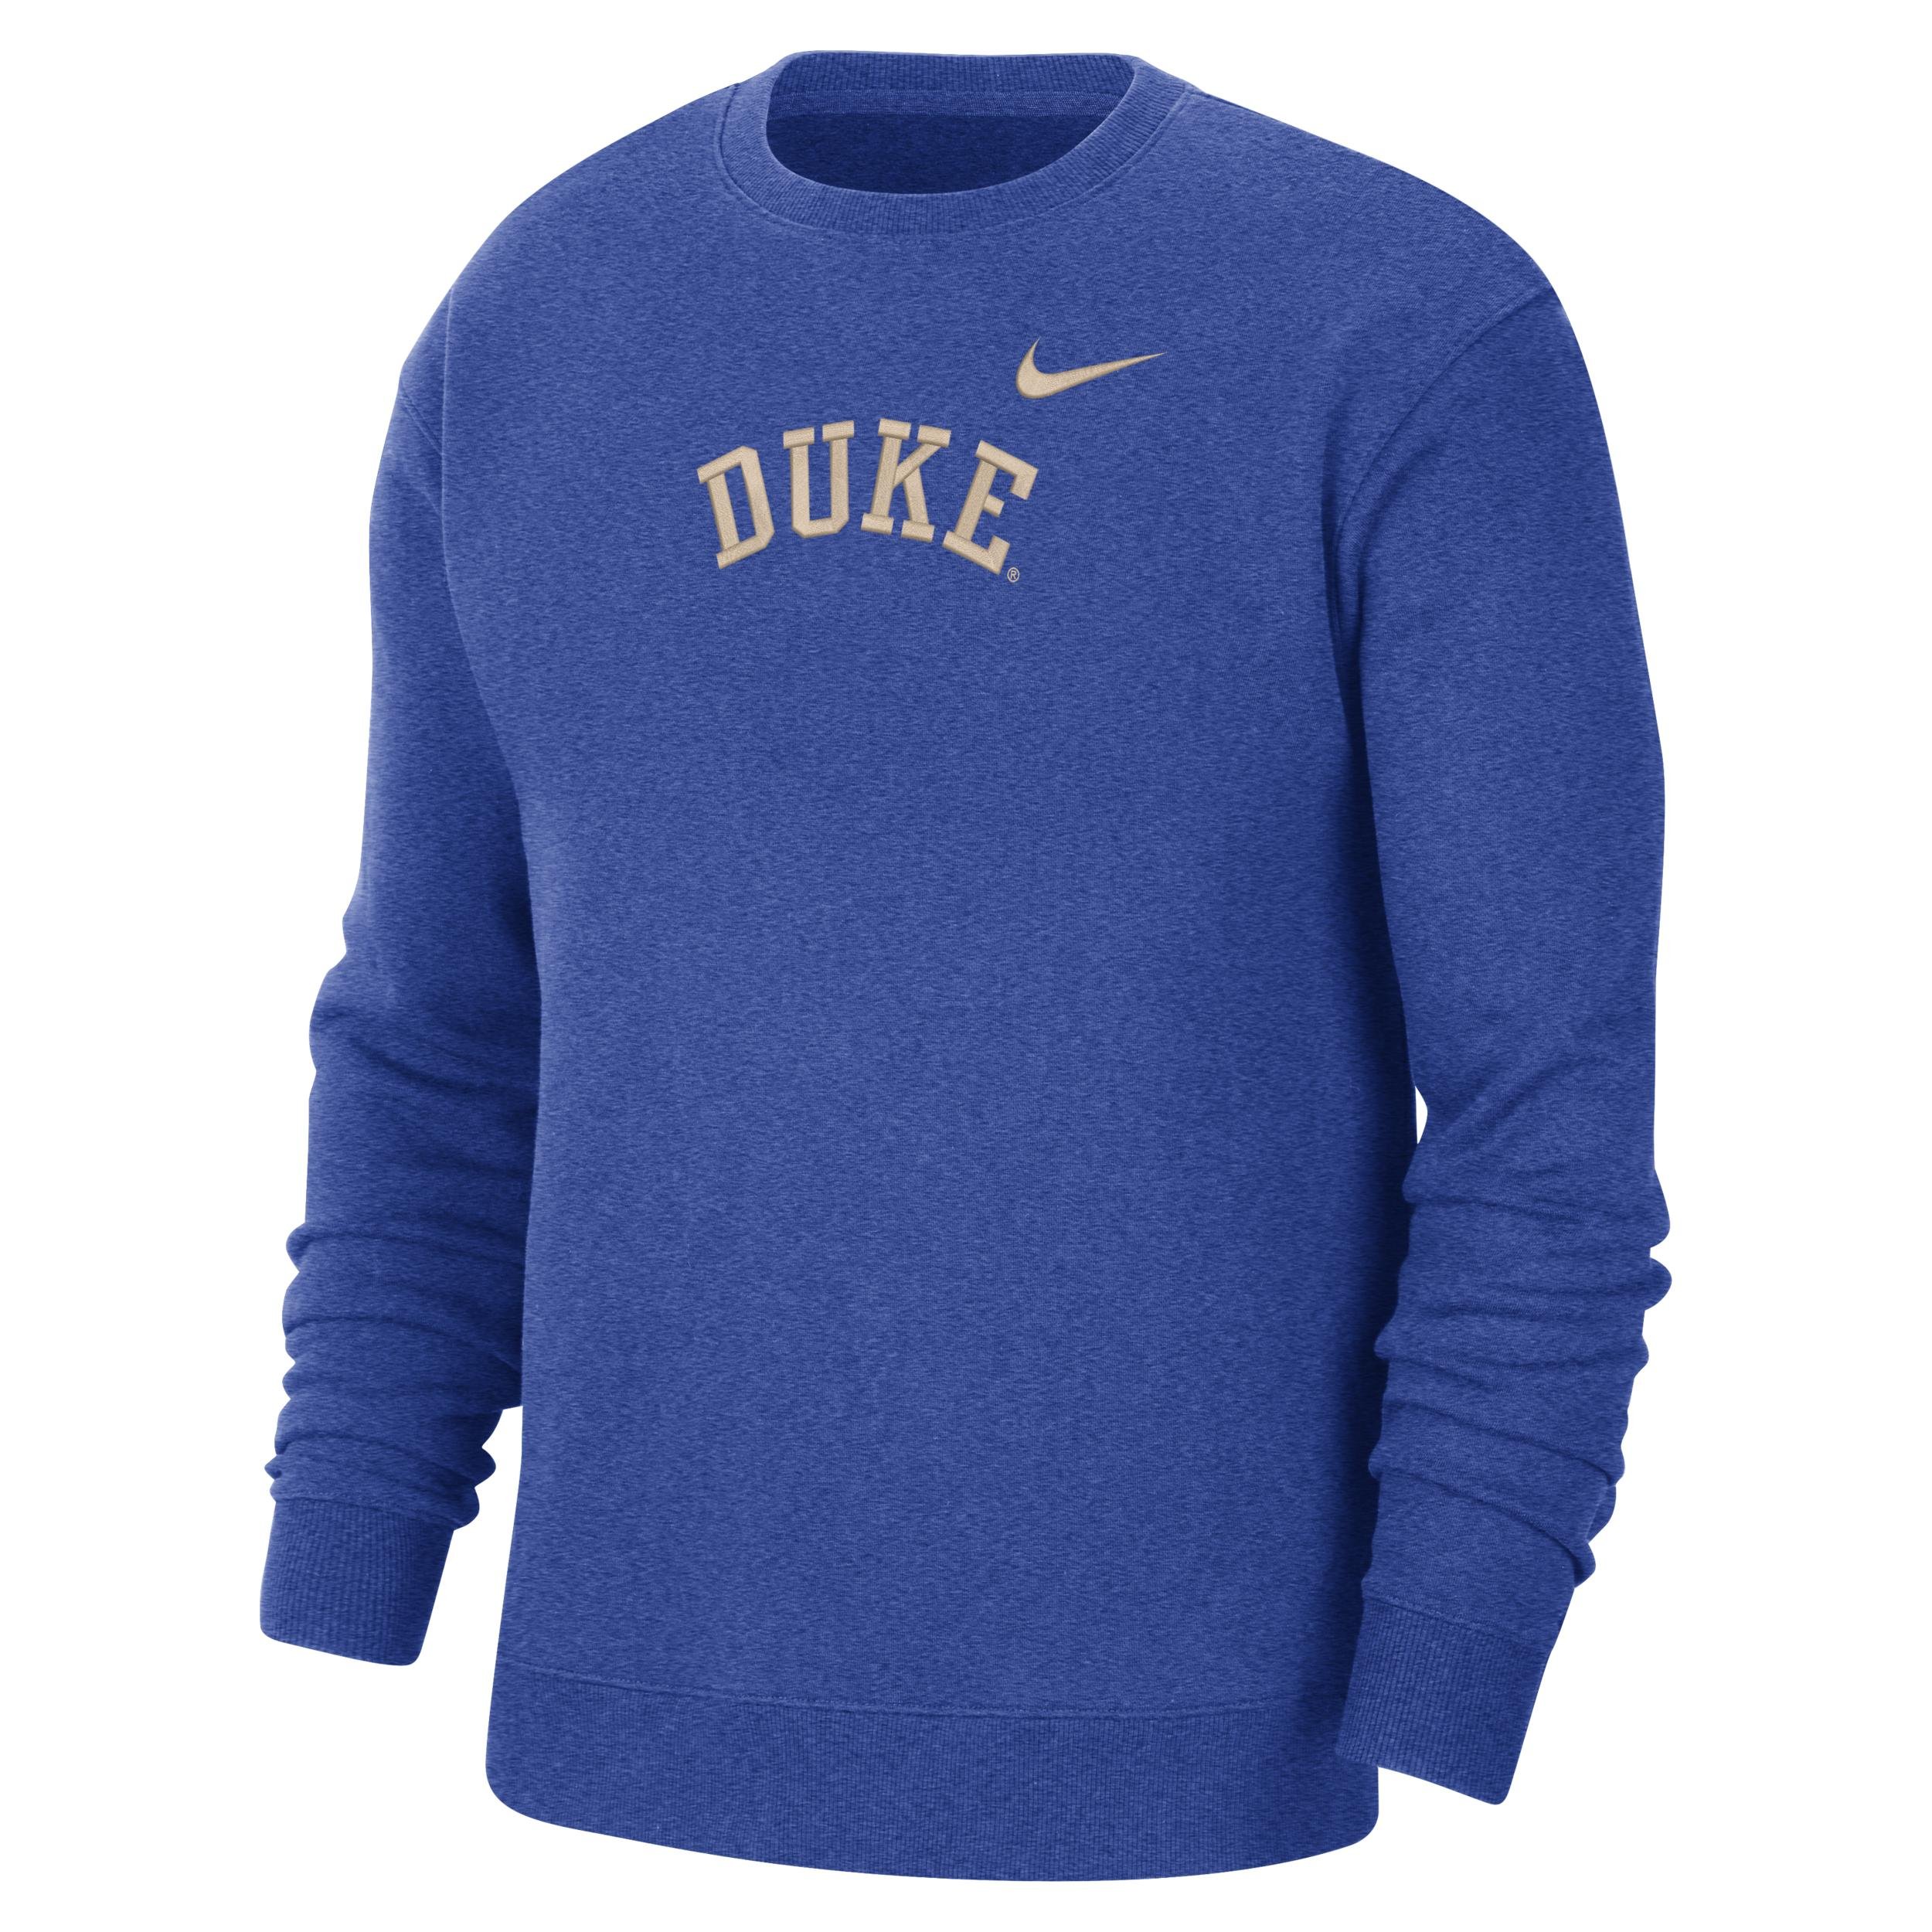 Duke Nike Men's College Crew-Neck Sweatshirt by NIKE